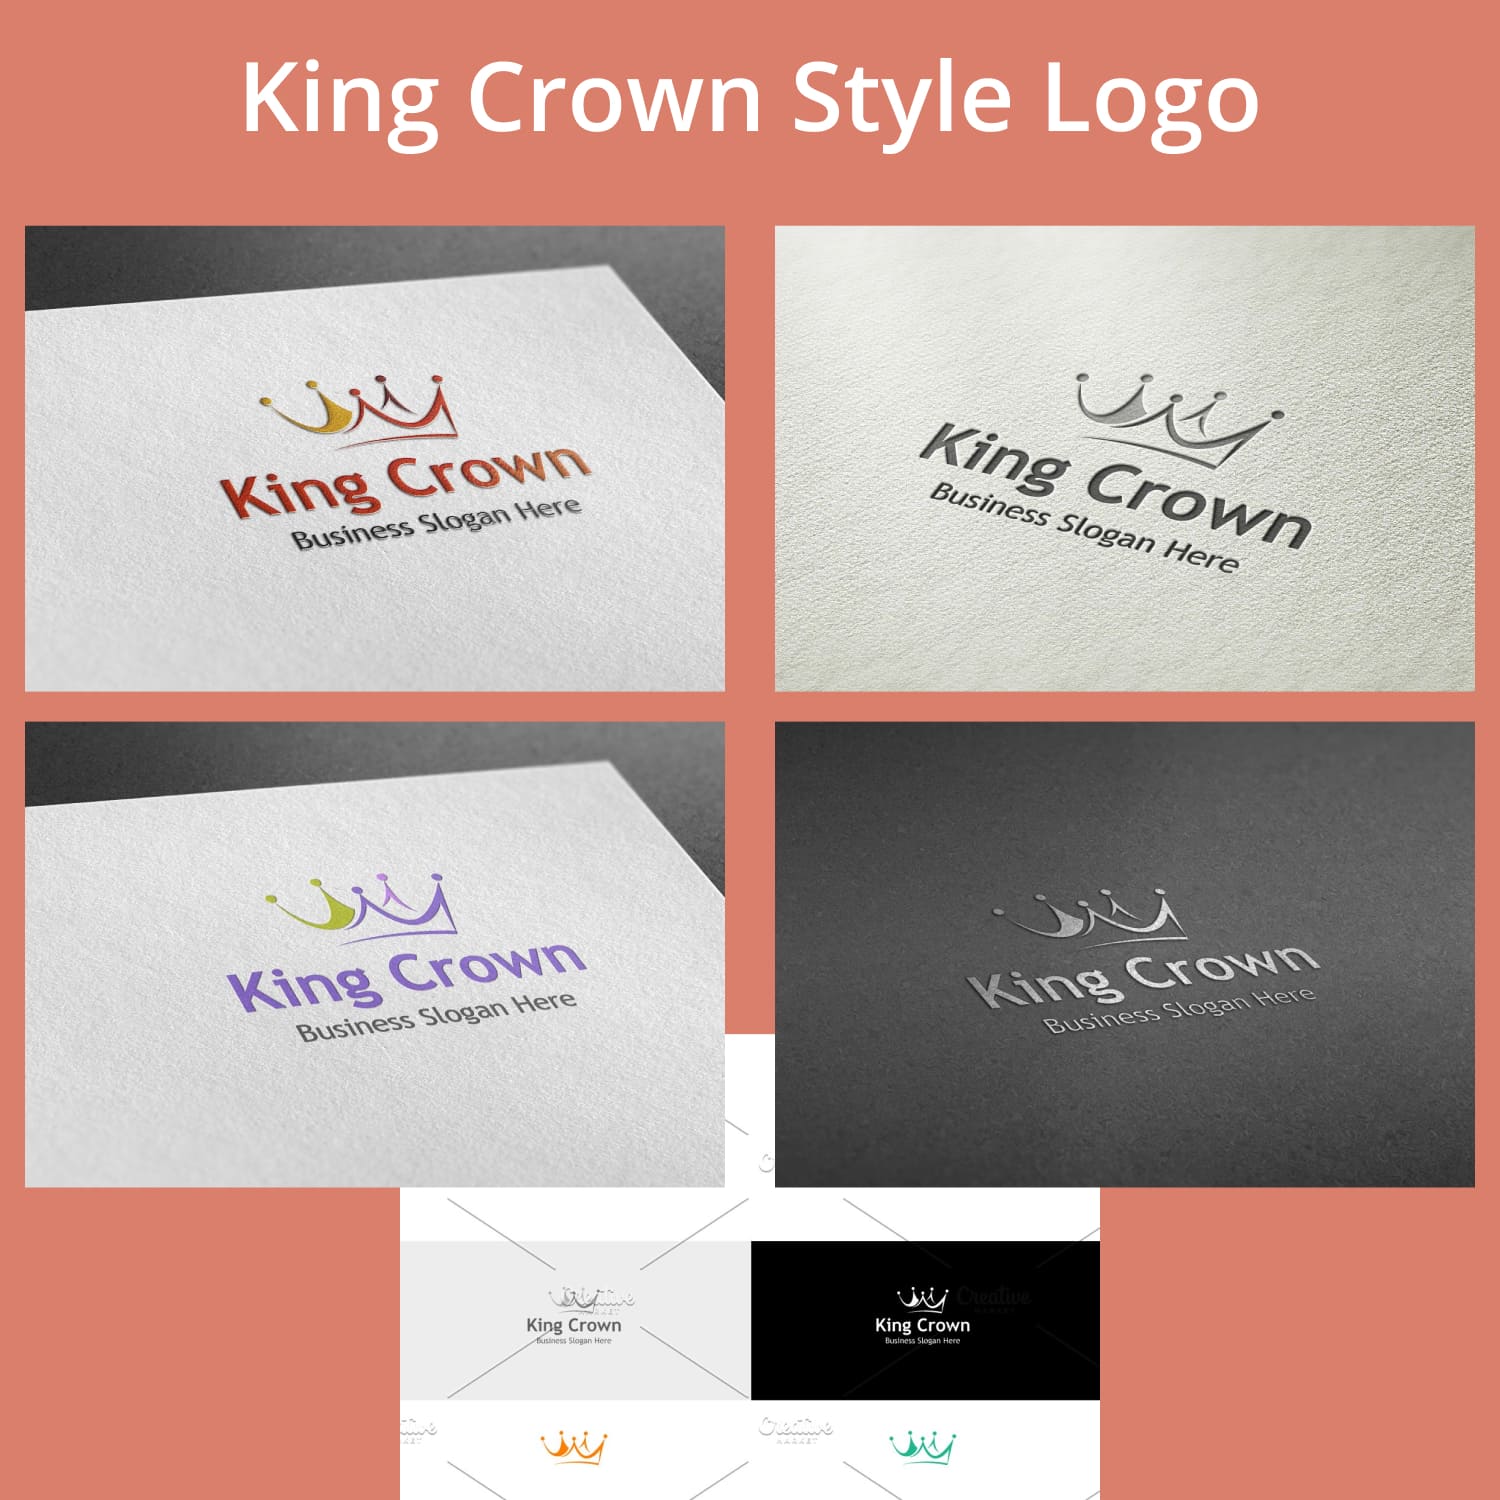 King Crown Style Logo.